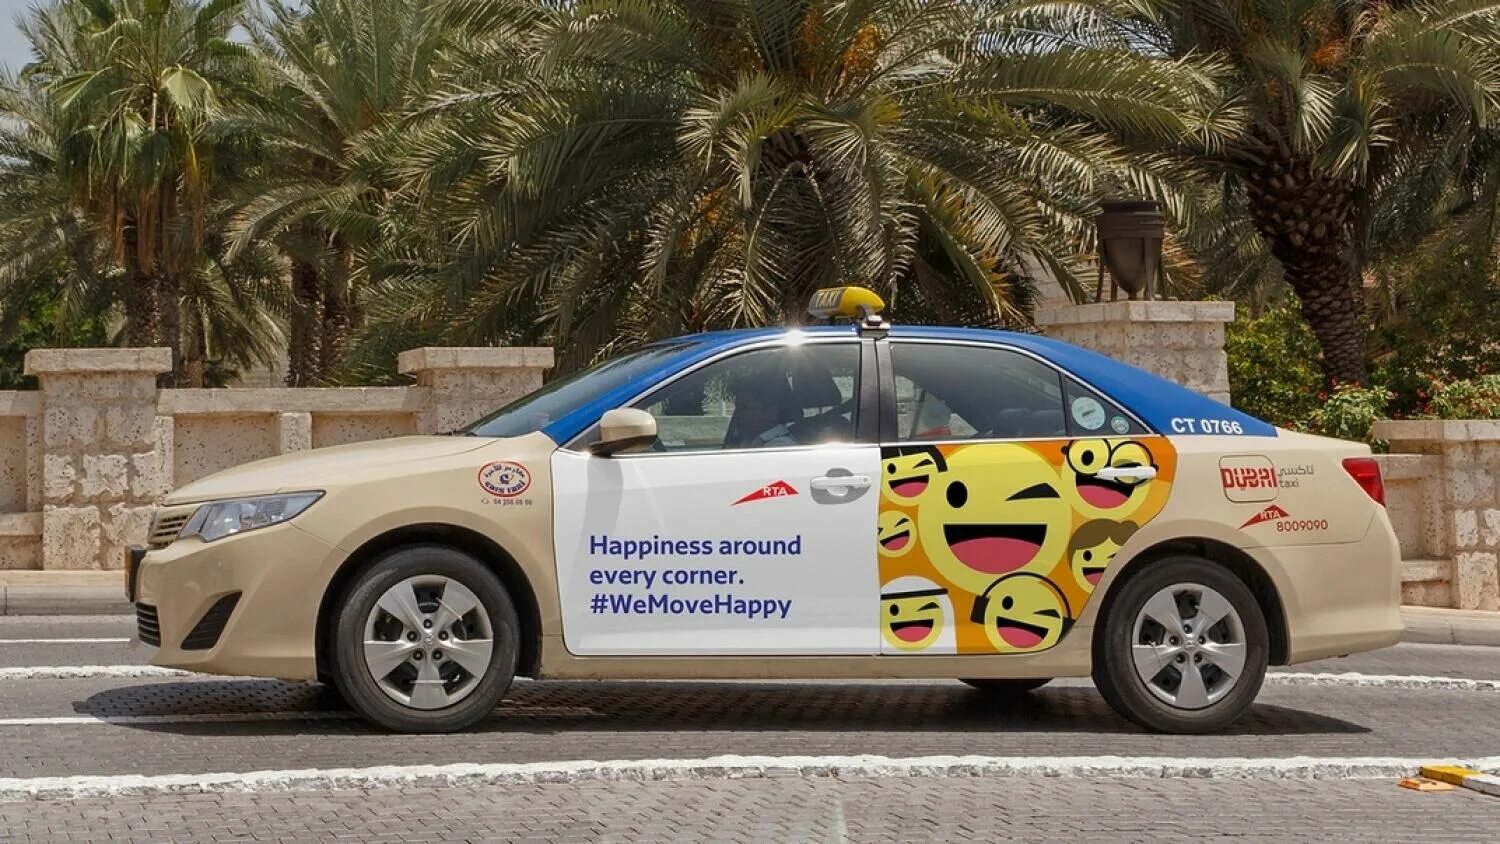 Careem такси Дубай. Такси в Абу Даби. Фэмили такси Дубай. Муниципальное такси Дубай. Таксисты дубай